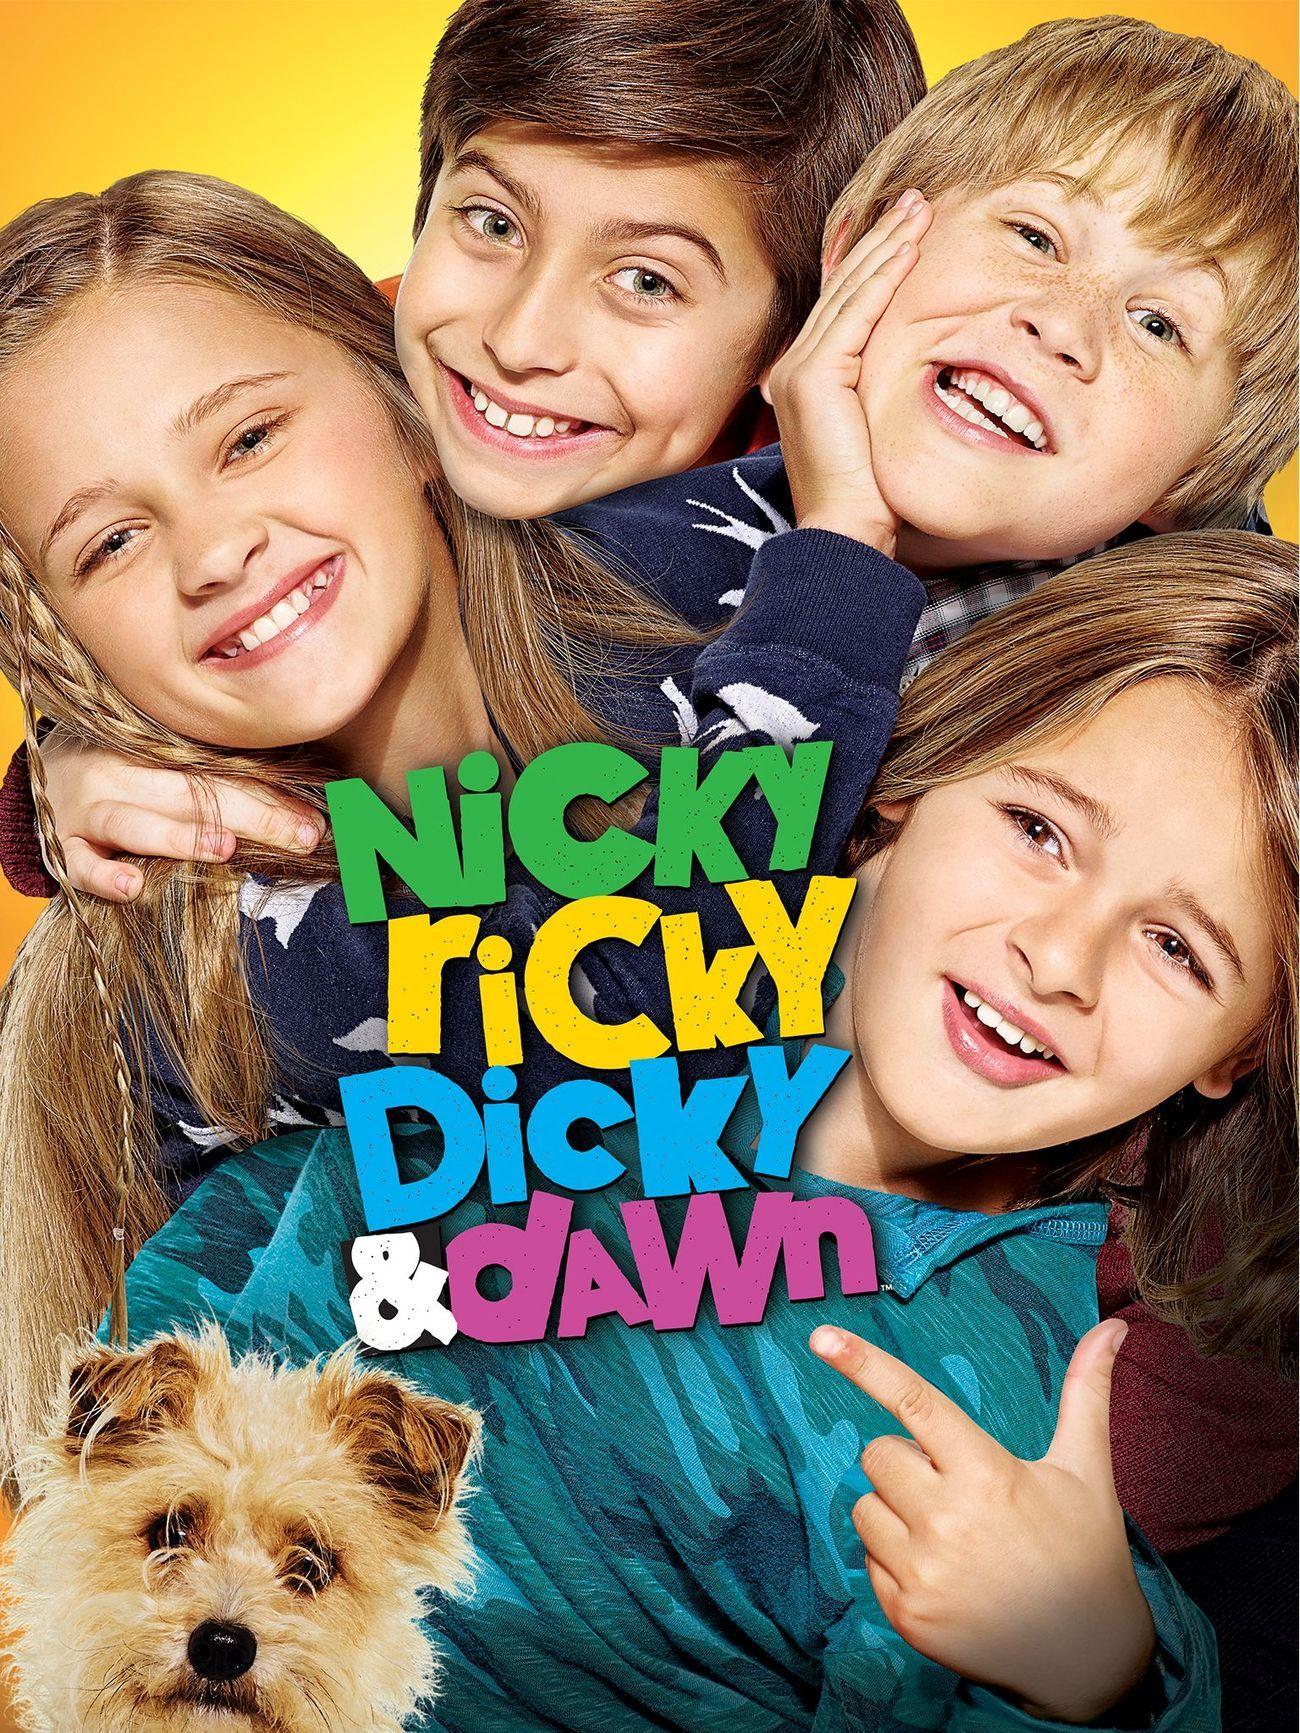 Watch Nicky, Ricky, Dicky & Dawn Episodes on Nickelodeon. Season 4